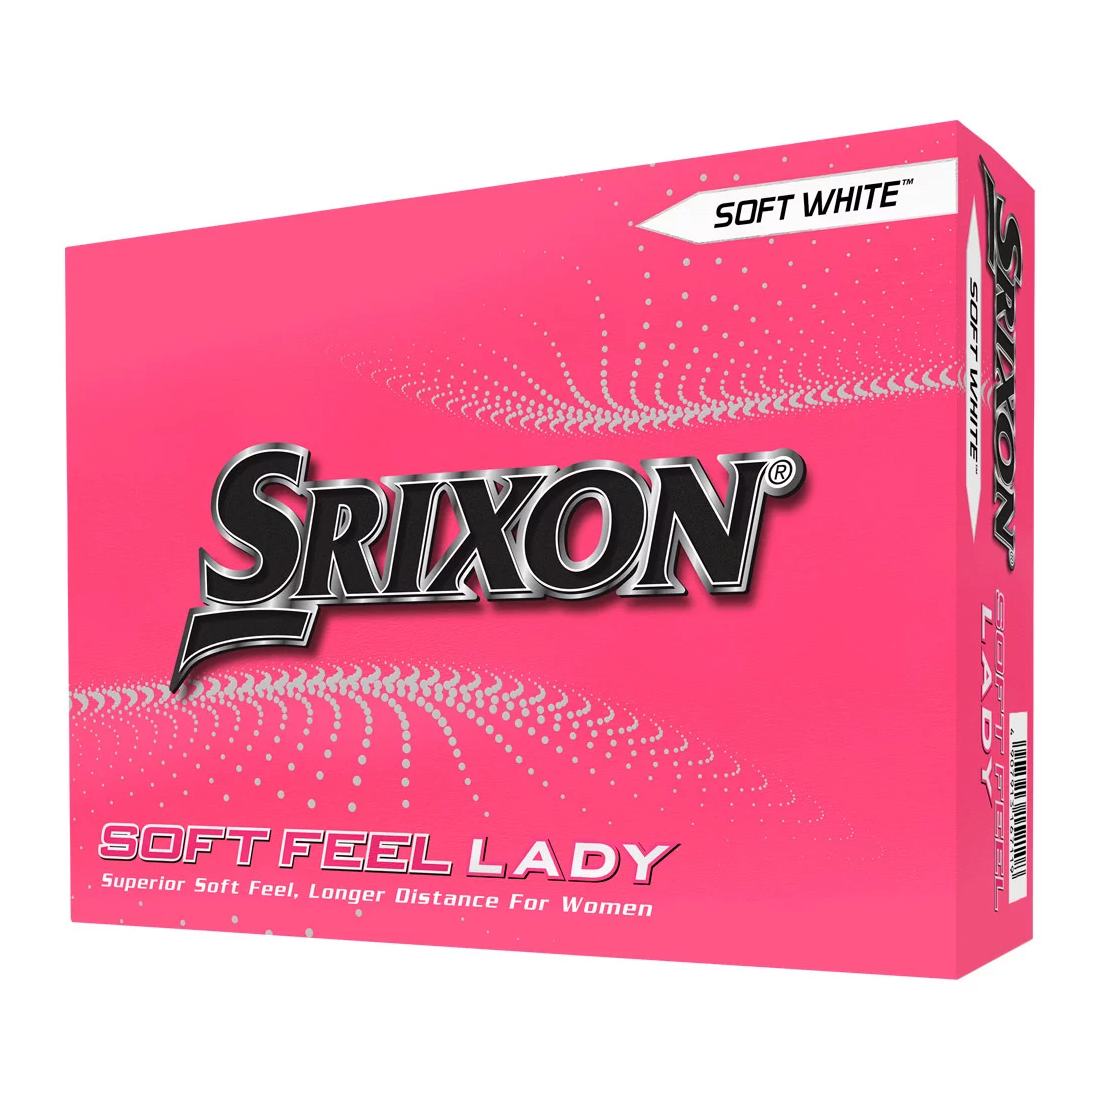 Srixon balles soft feel lady